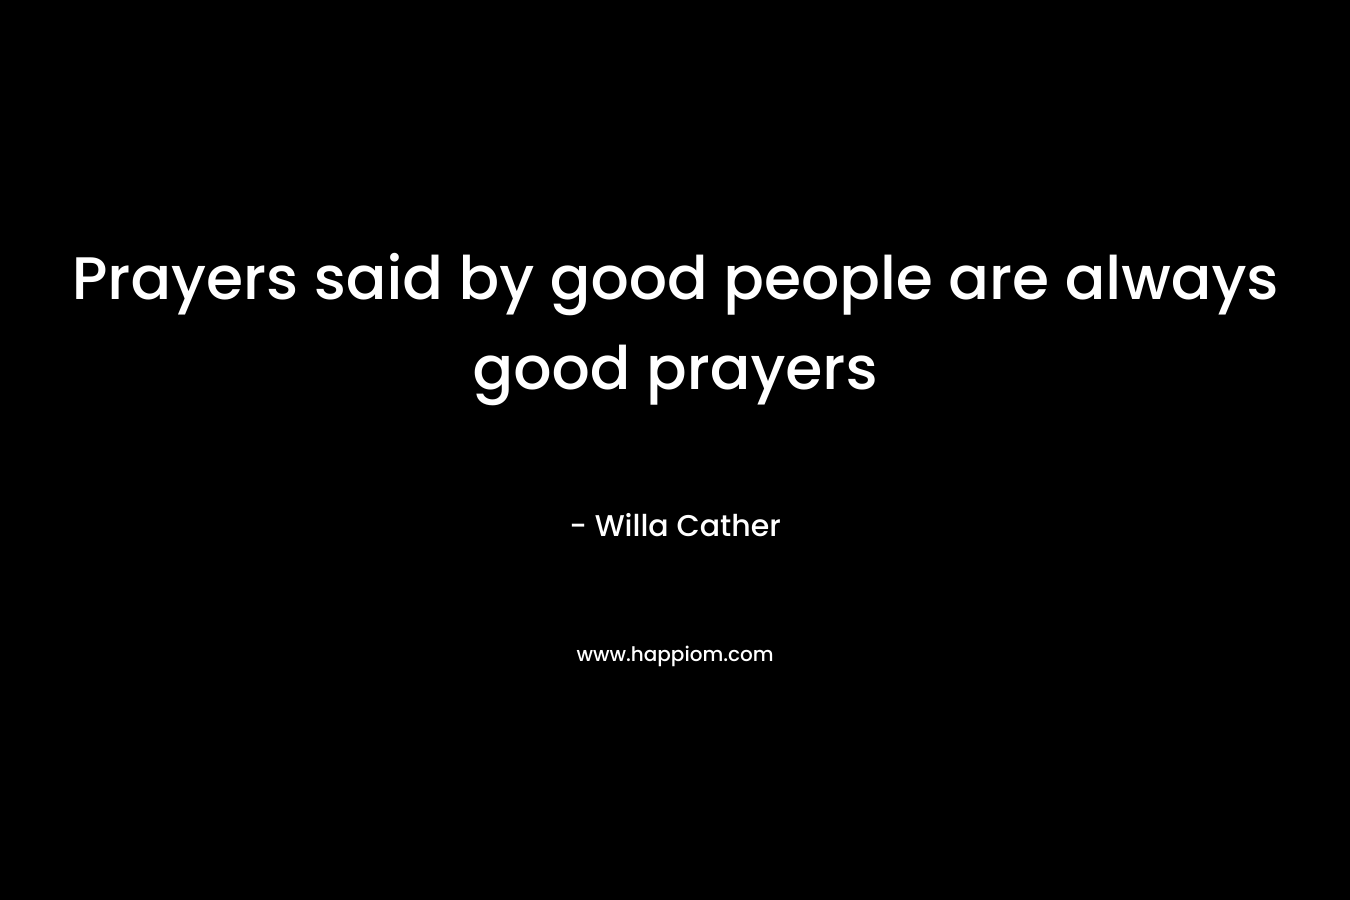 Prayers said by good people are always good prayers